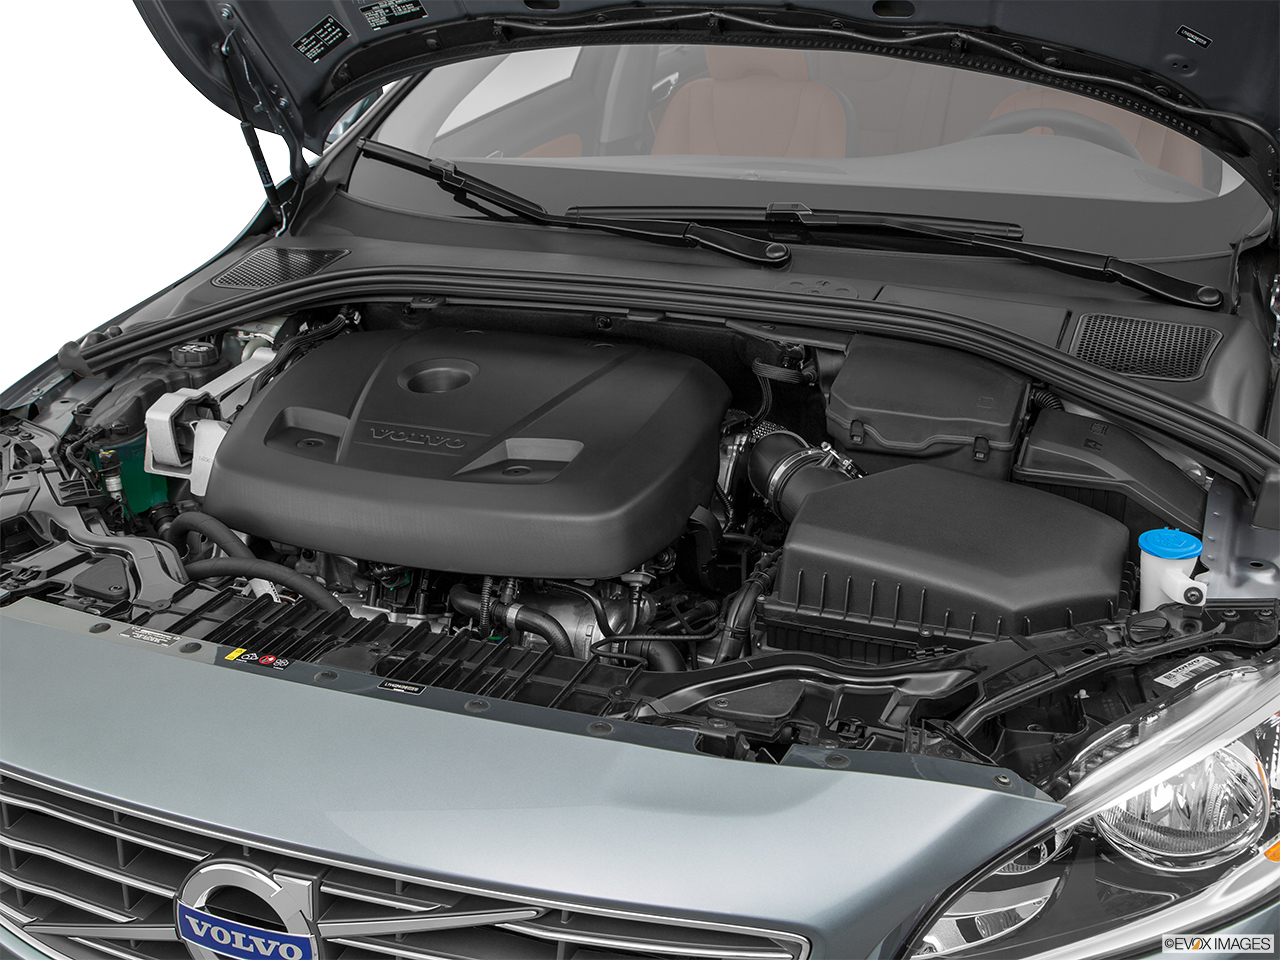 2017 Volvo S60 T5 Inscription Engine. 